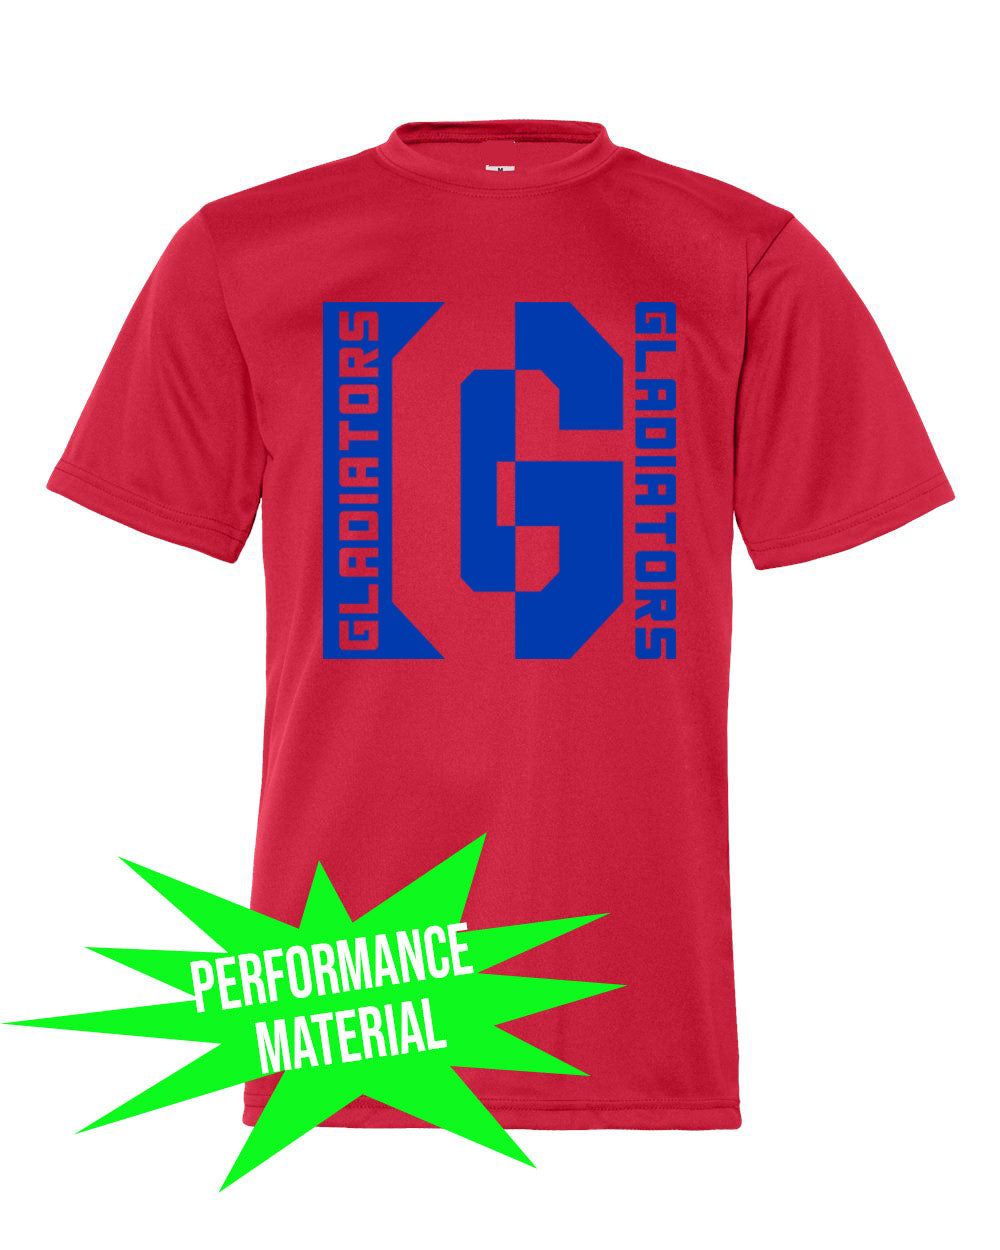 Goshen School Performance Material design 5 T-Shirt